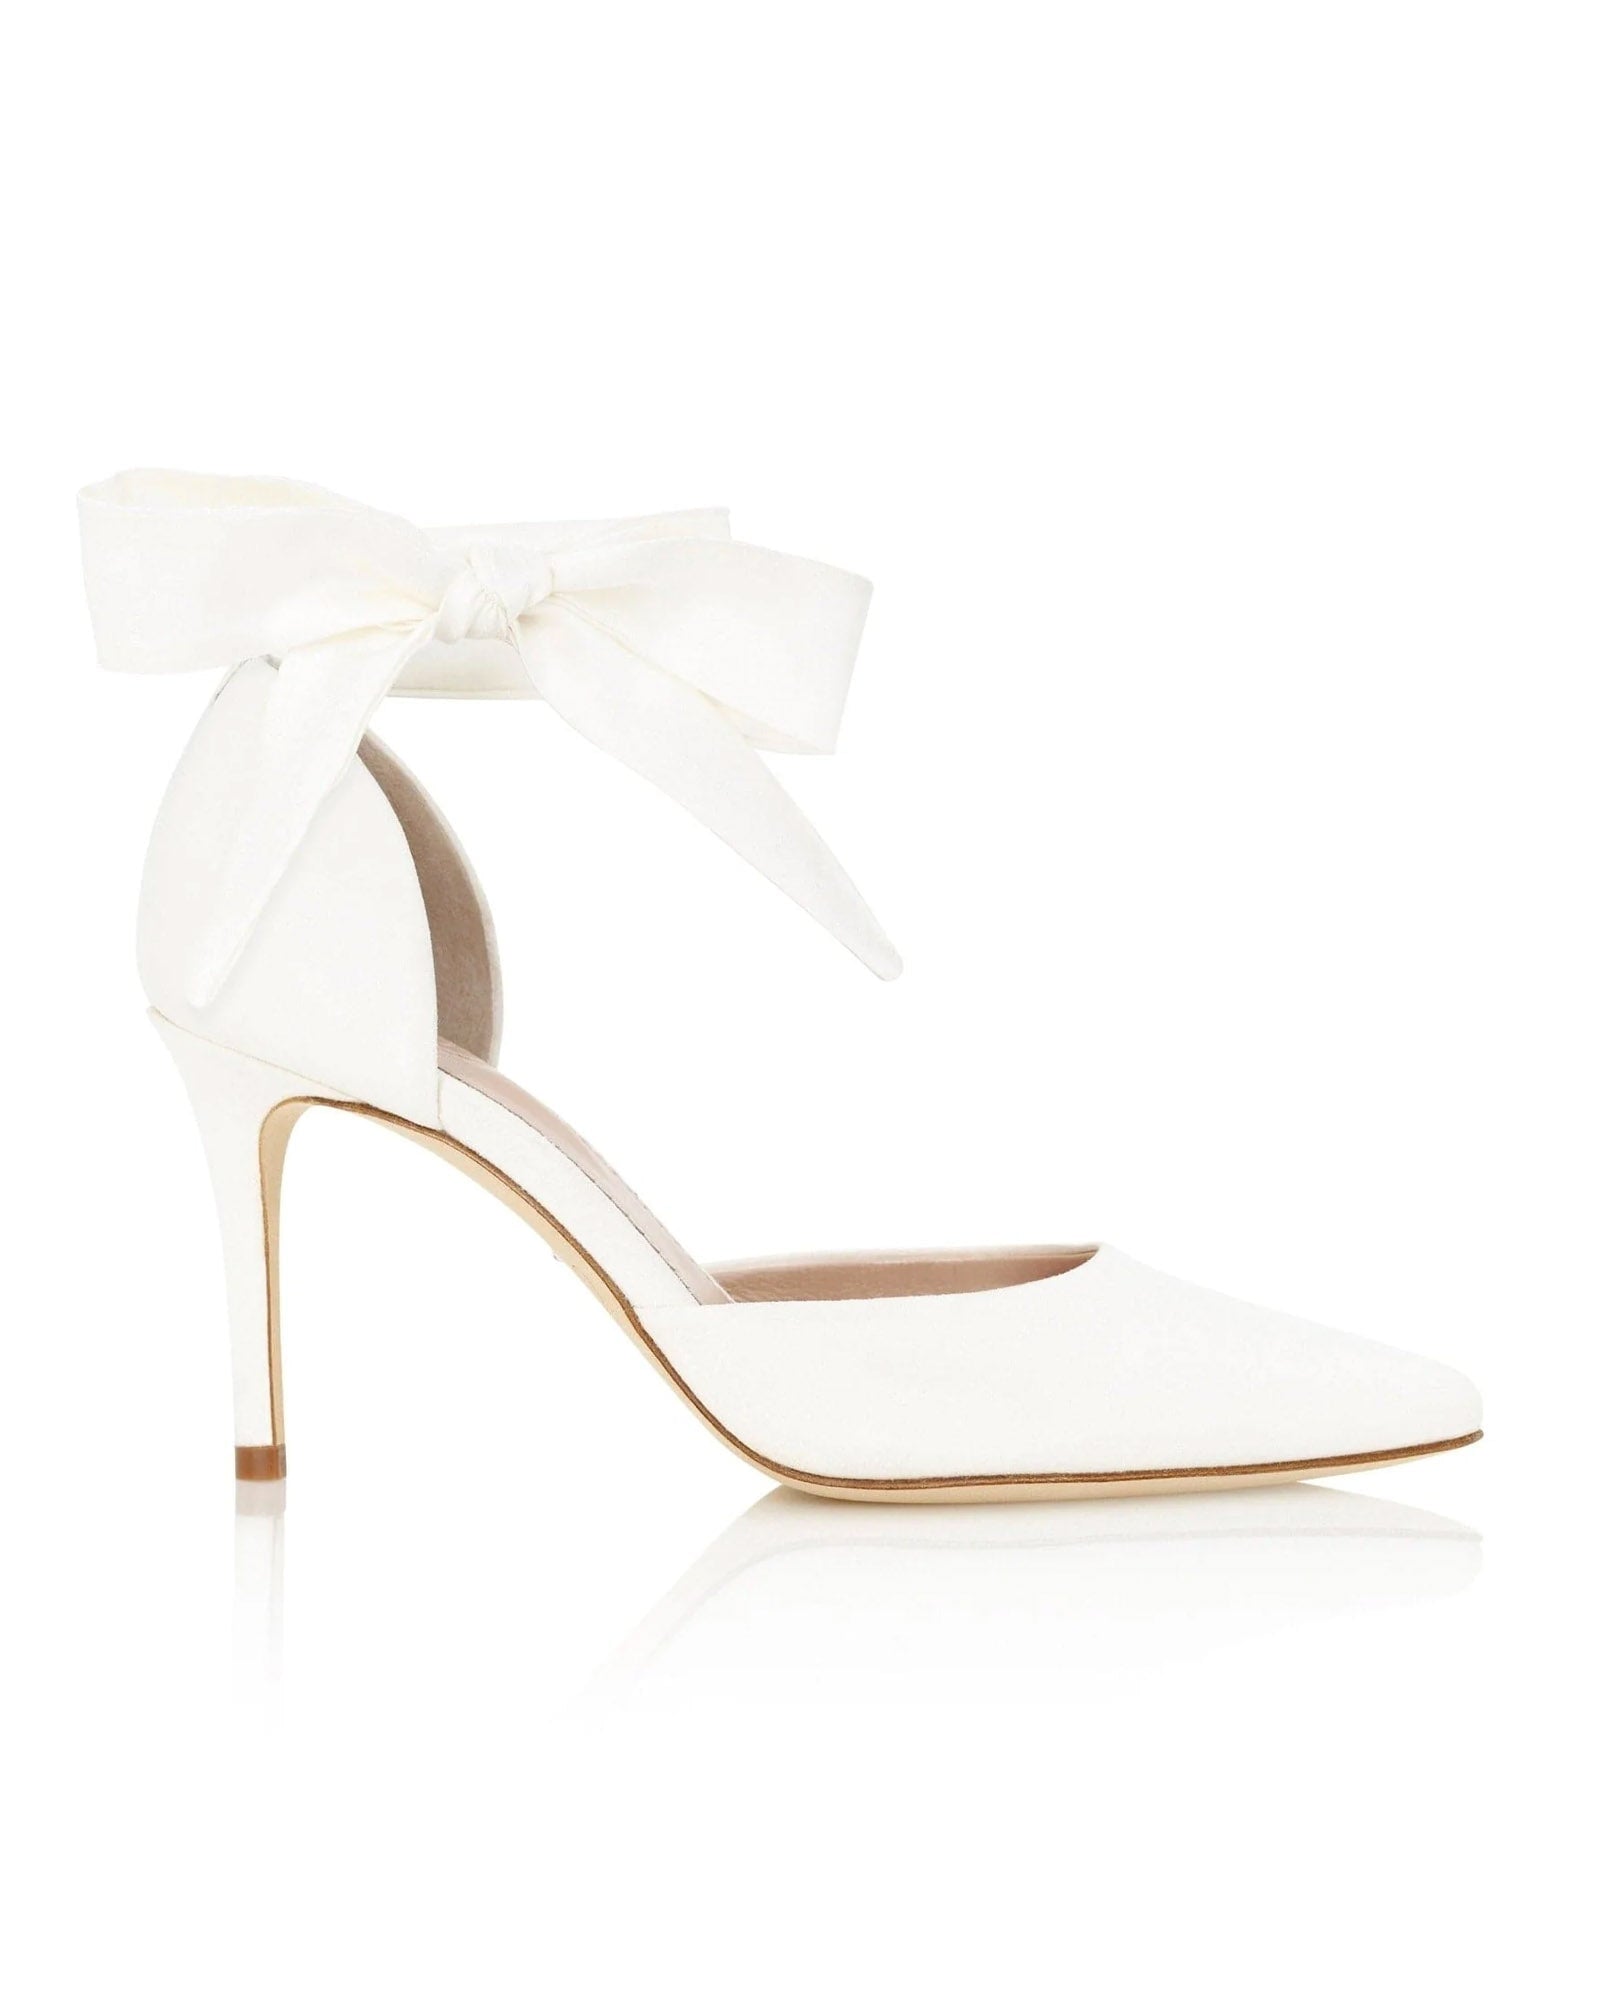 Gabor Designer black suede mid heels uk size 4.5 | eBay